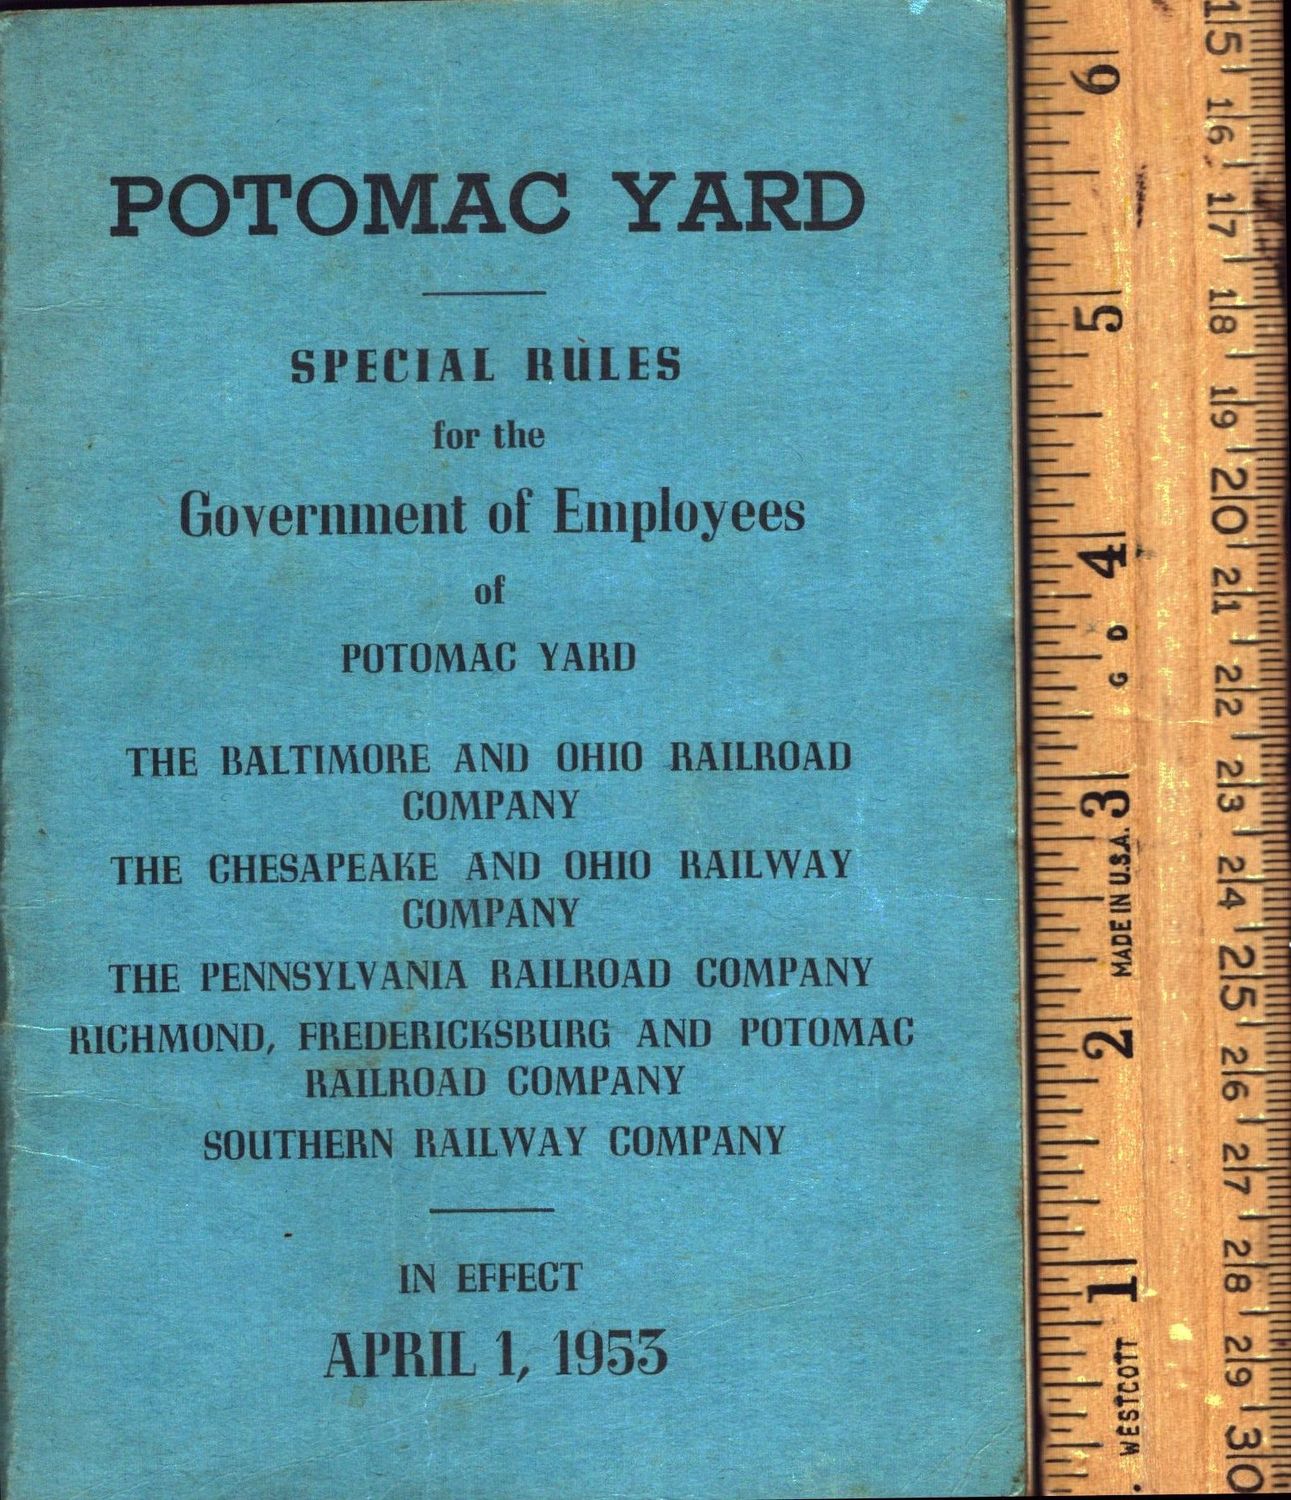 Richmond Fredericksburg and Potomac Potomac Yard Special Rules 1953